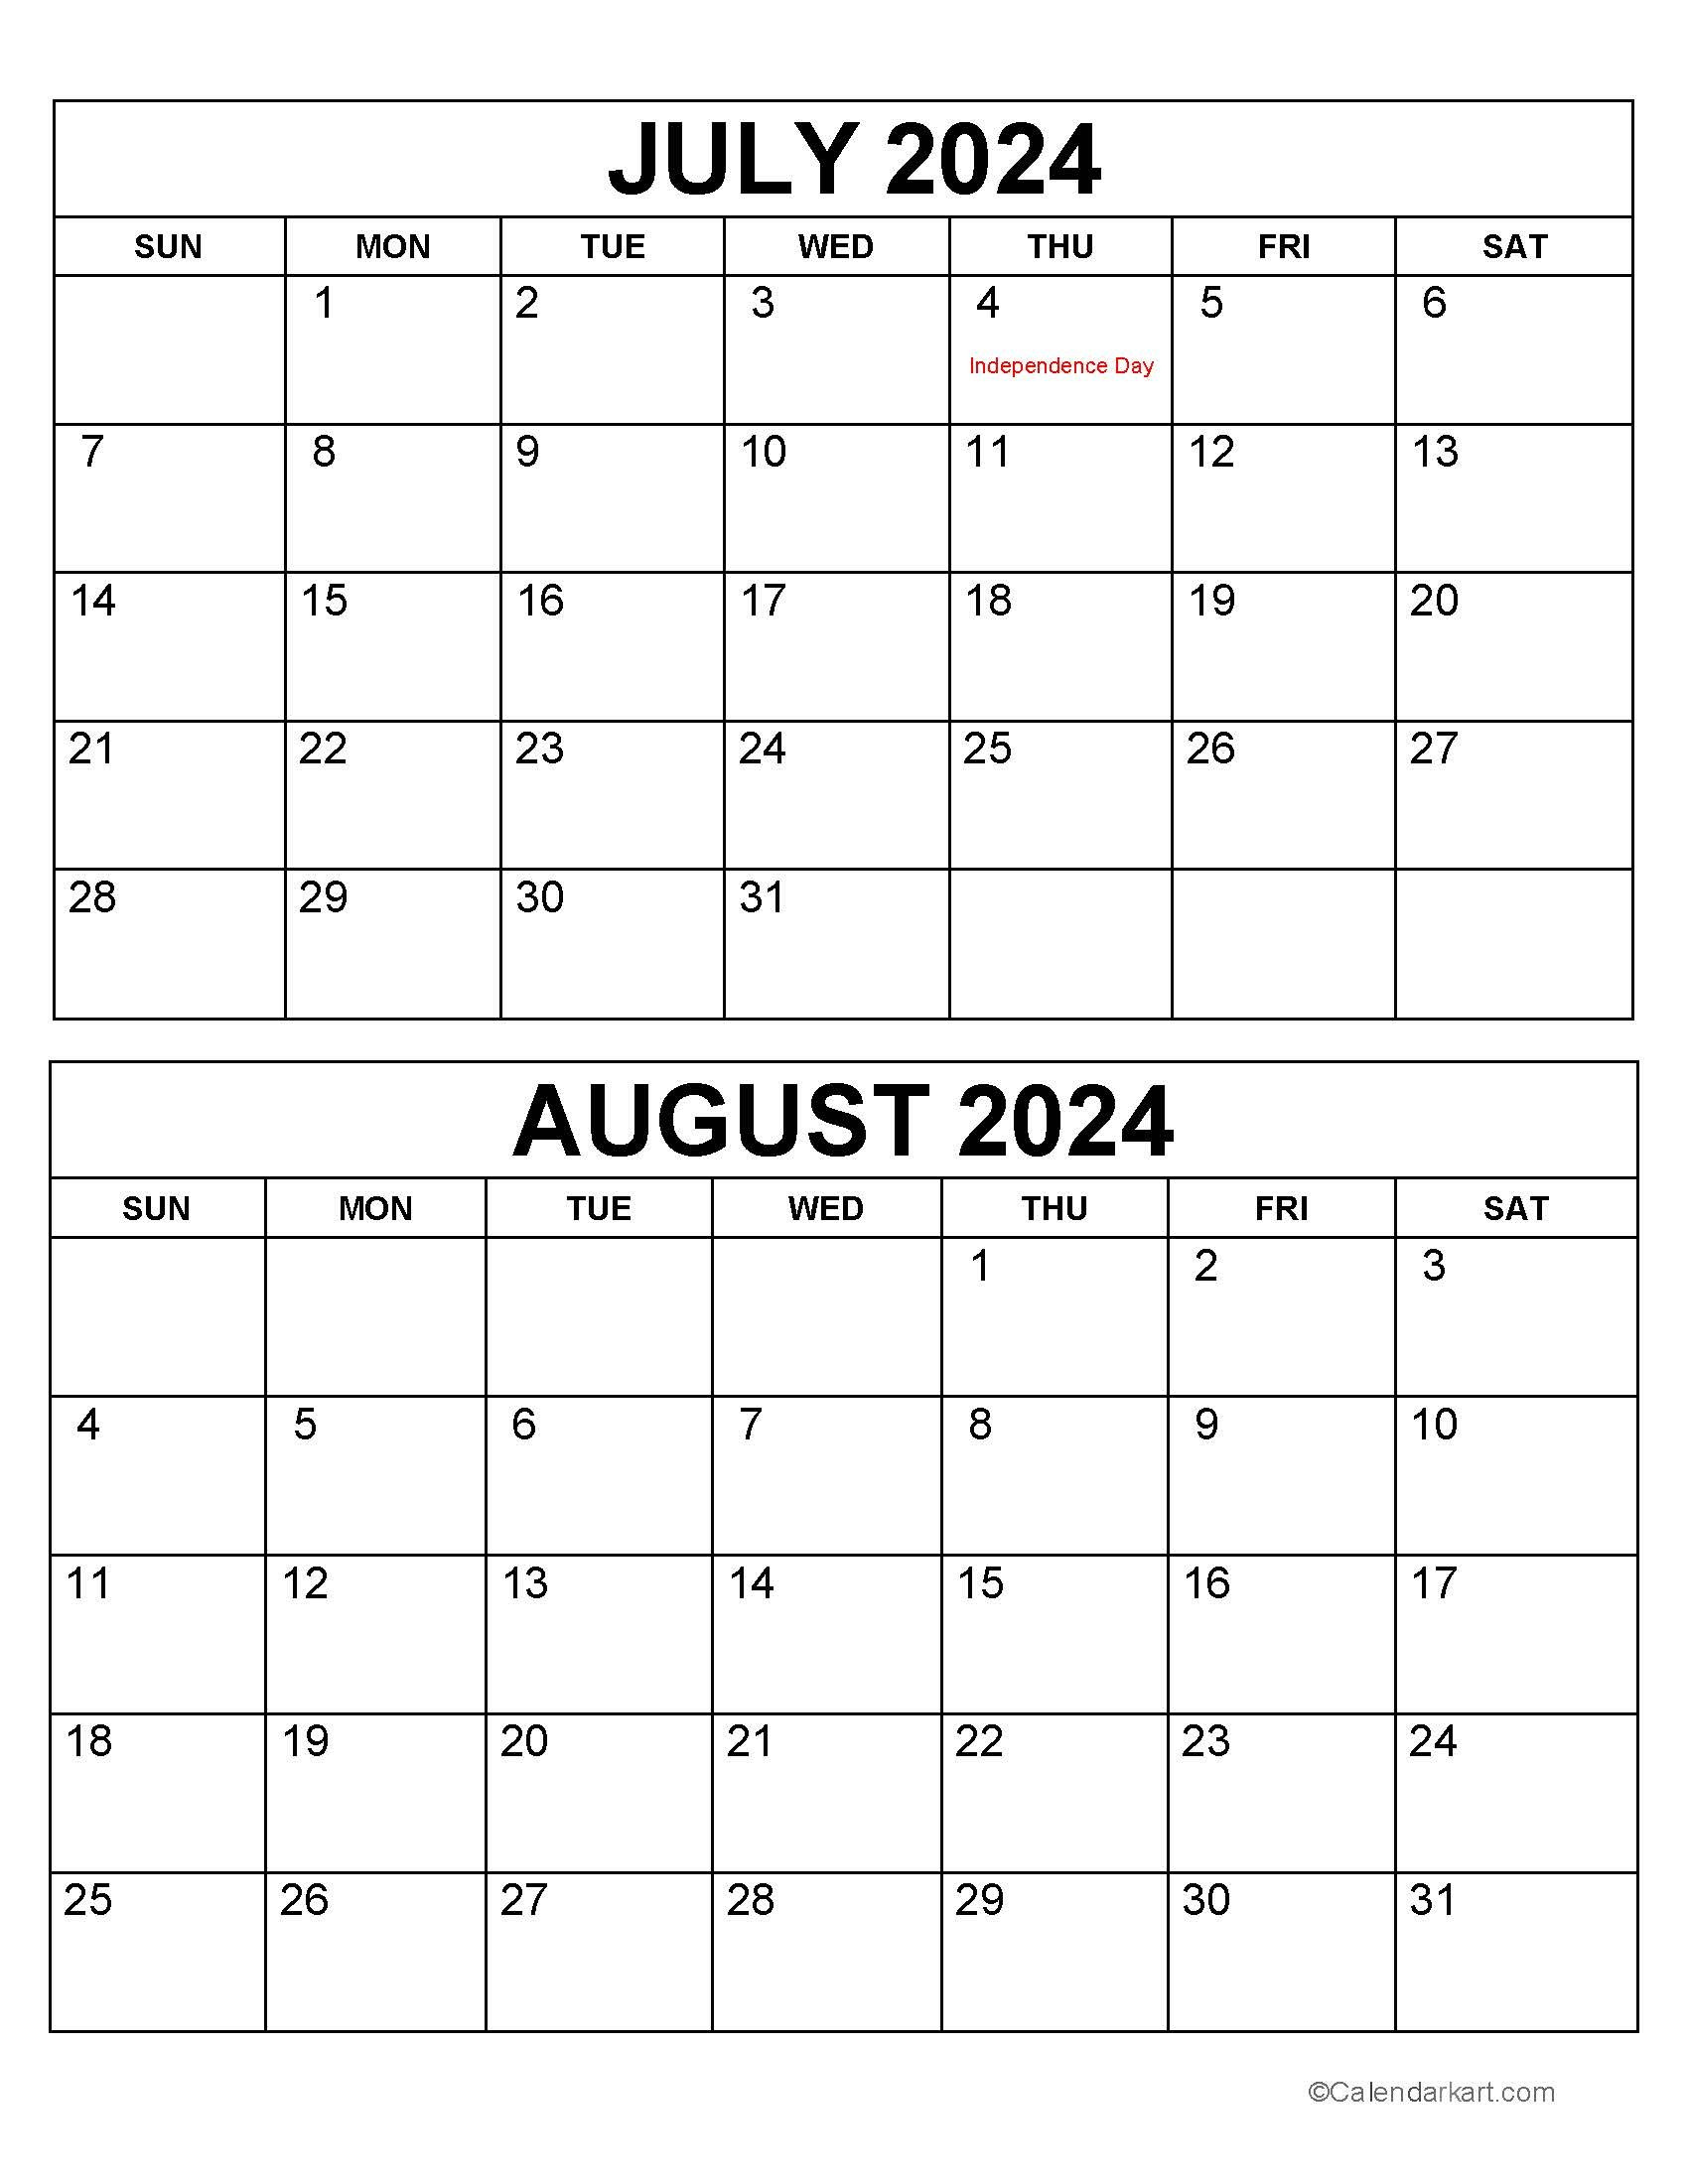 Printable July August 2024 Calendar | Calendarkart intended for Calendar July 2024 And August 2024